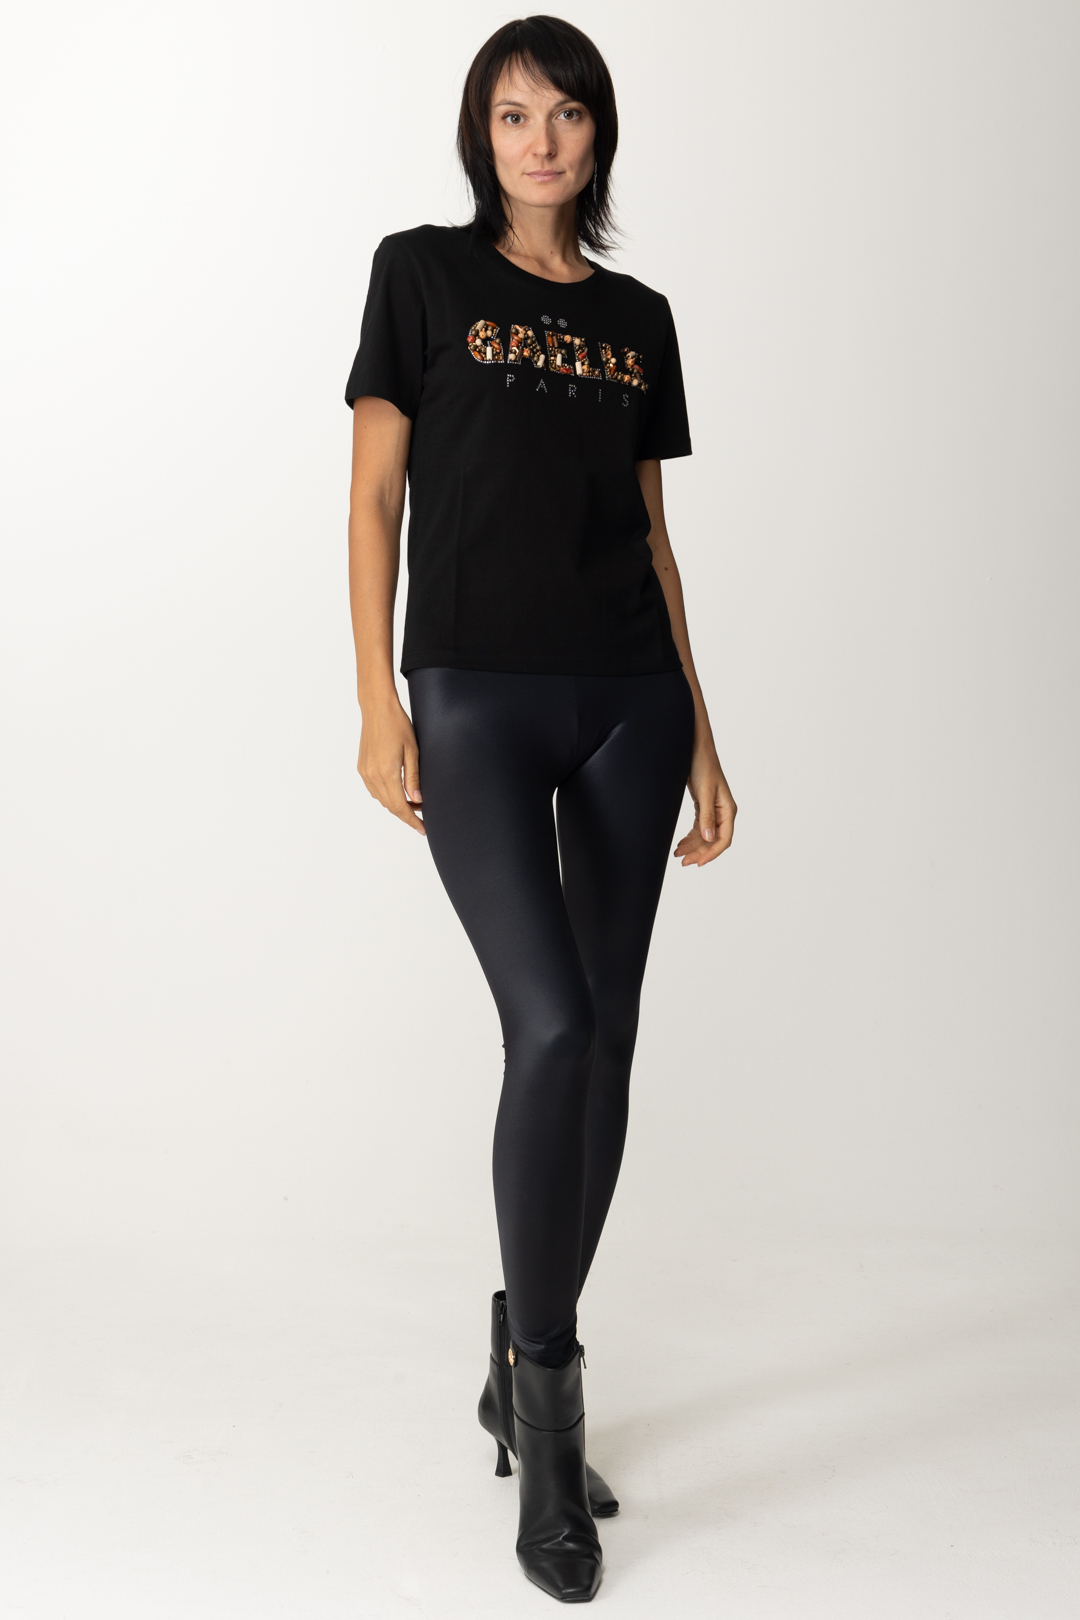 Aperçu: Gaelle Paris T-shirt avec logo brodé Nero